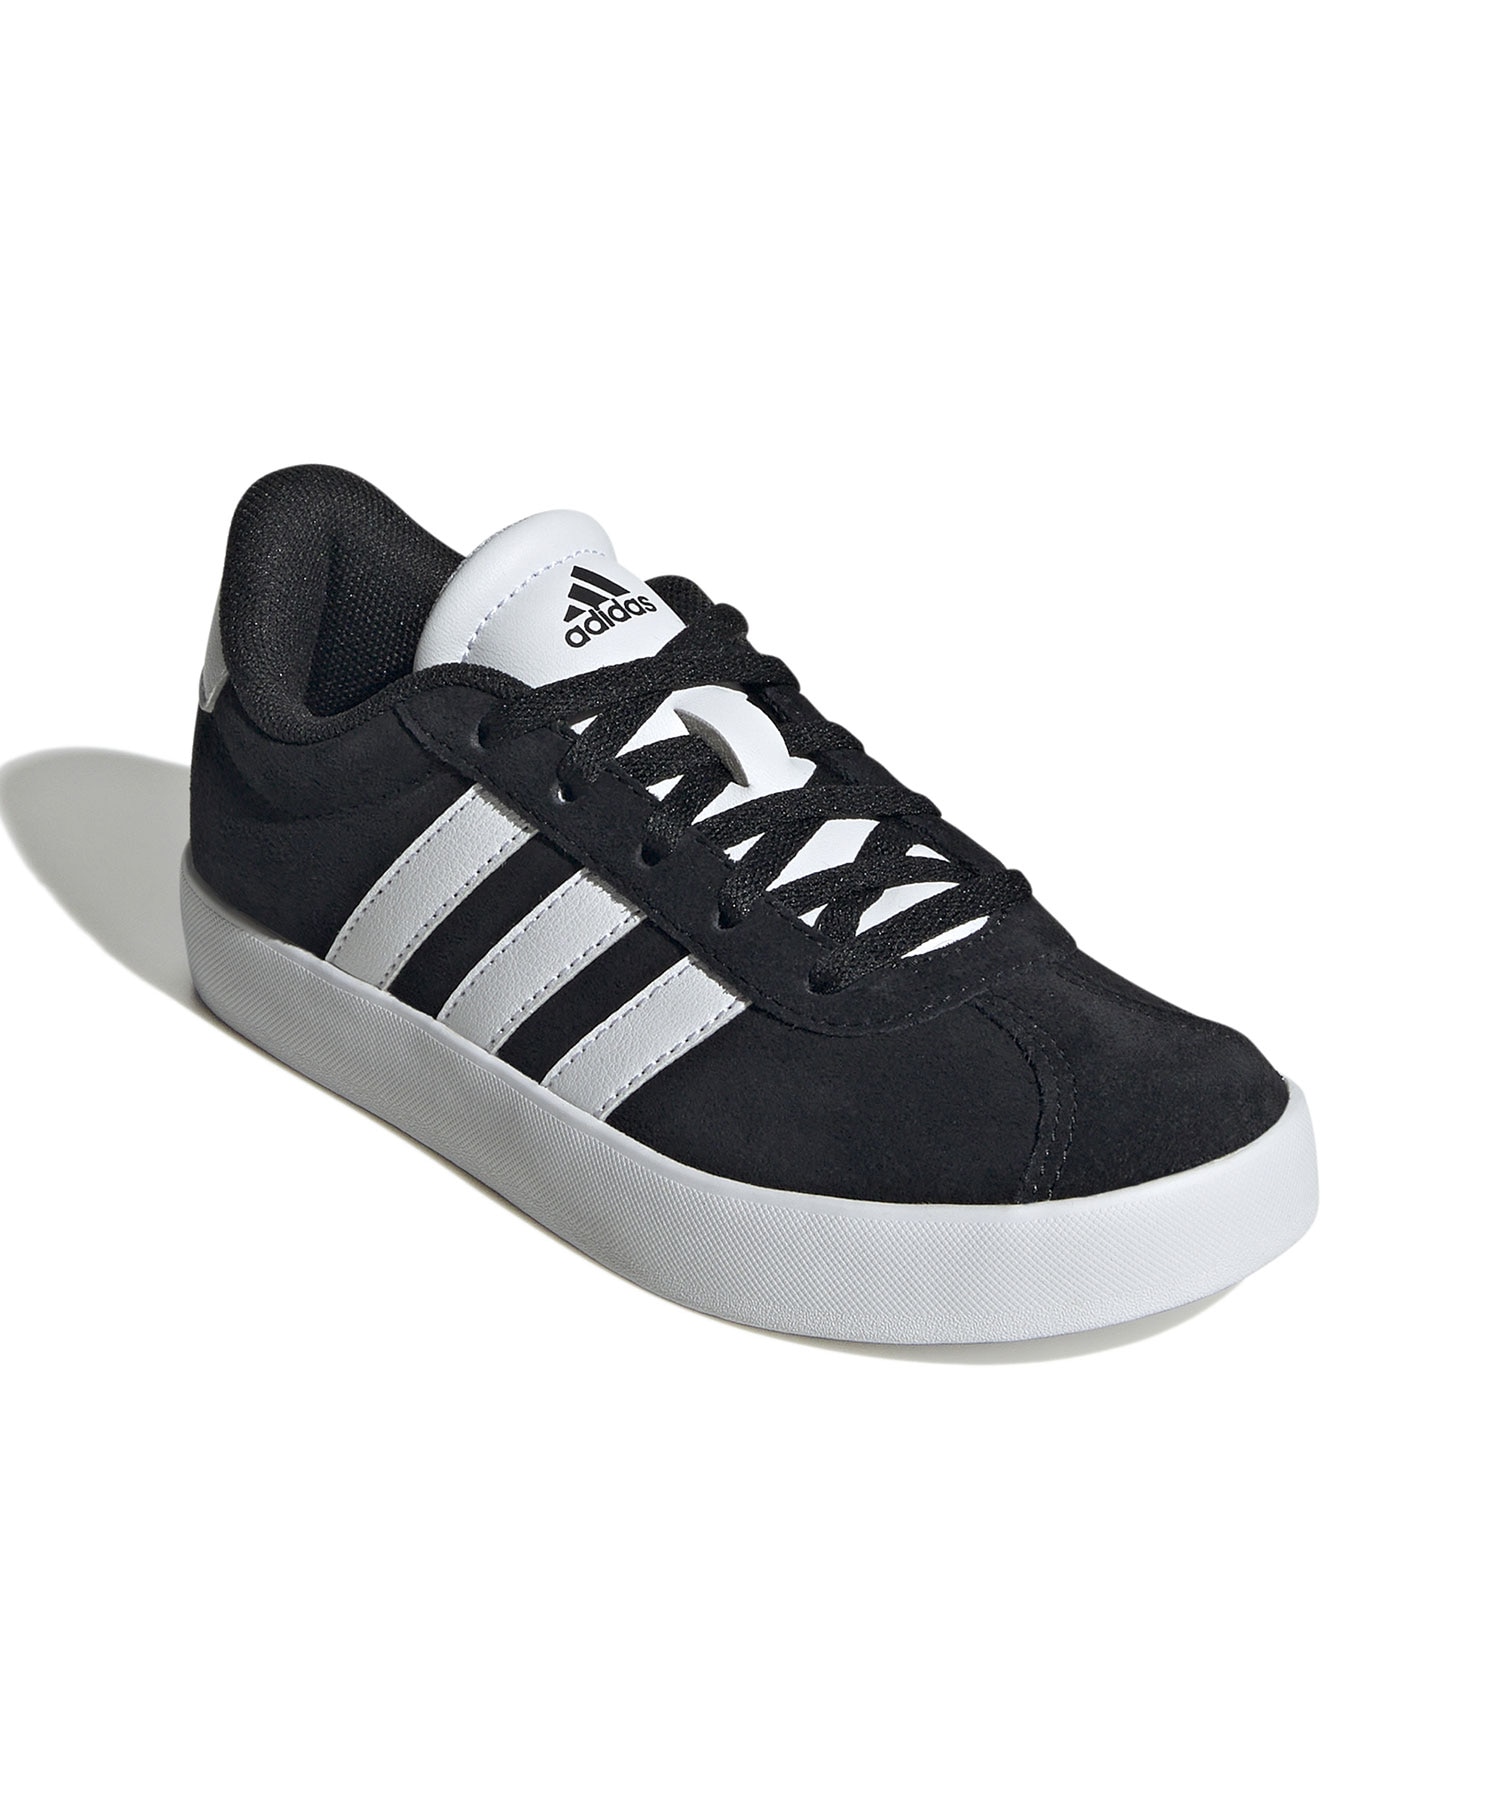 adidas VL Court Jr sneakers